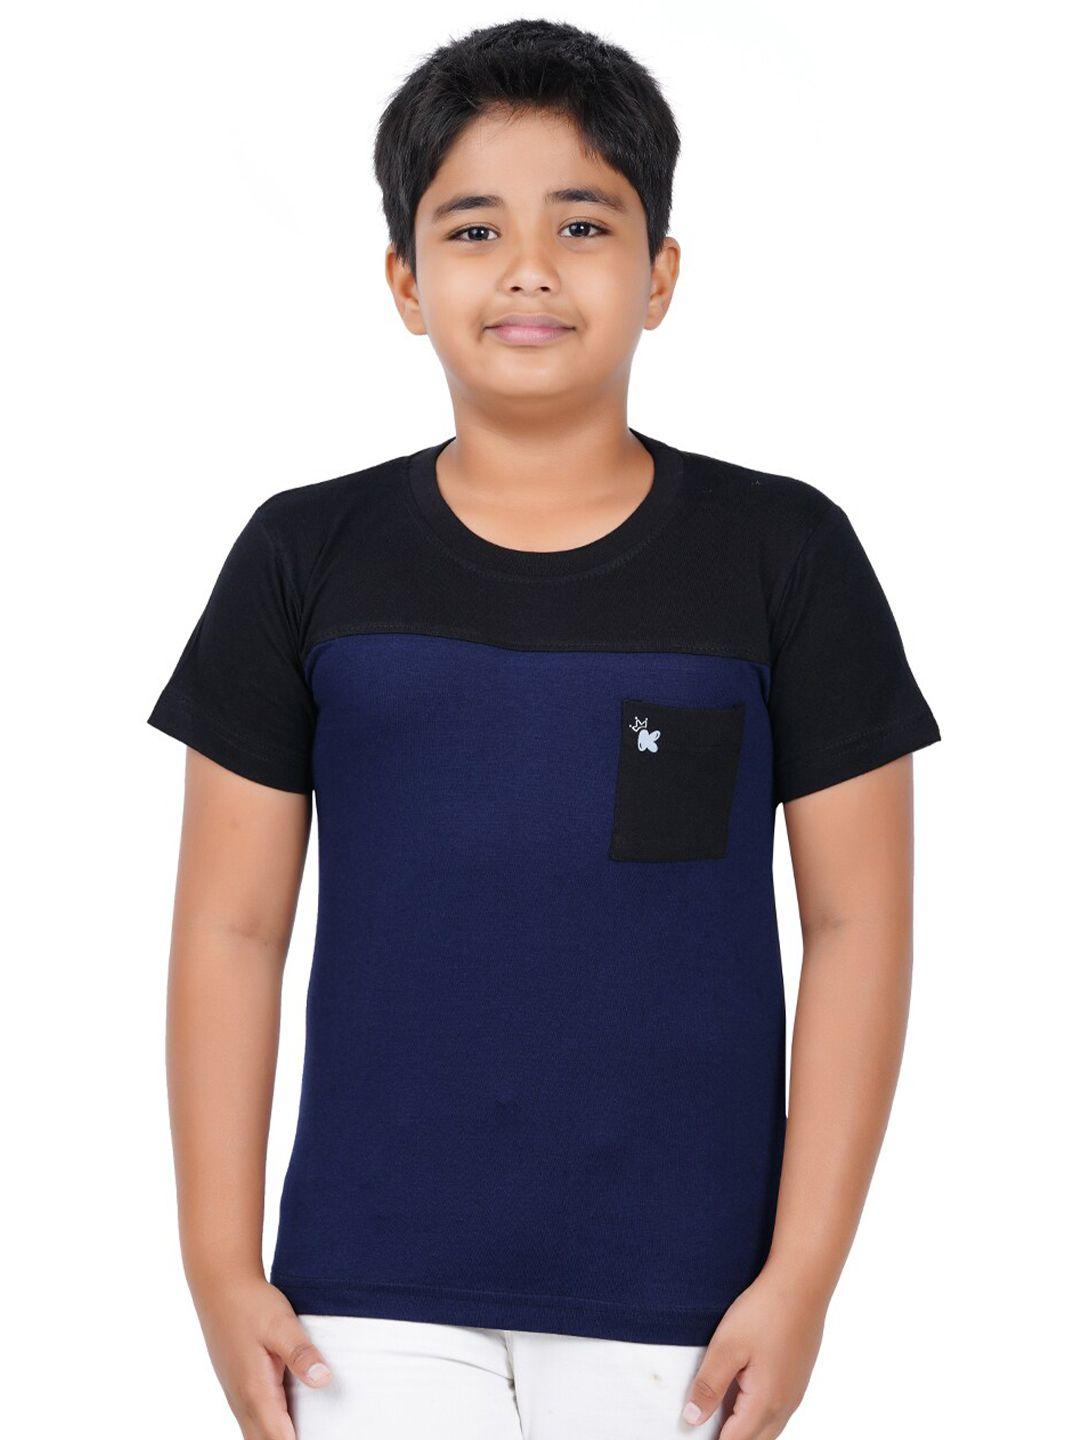 kiddeo boys navy blue & black pockets slim fit t-shirt